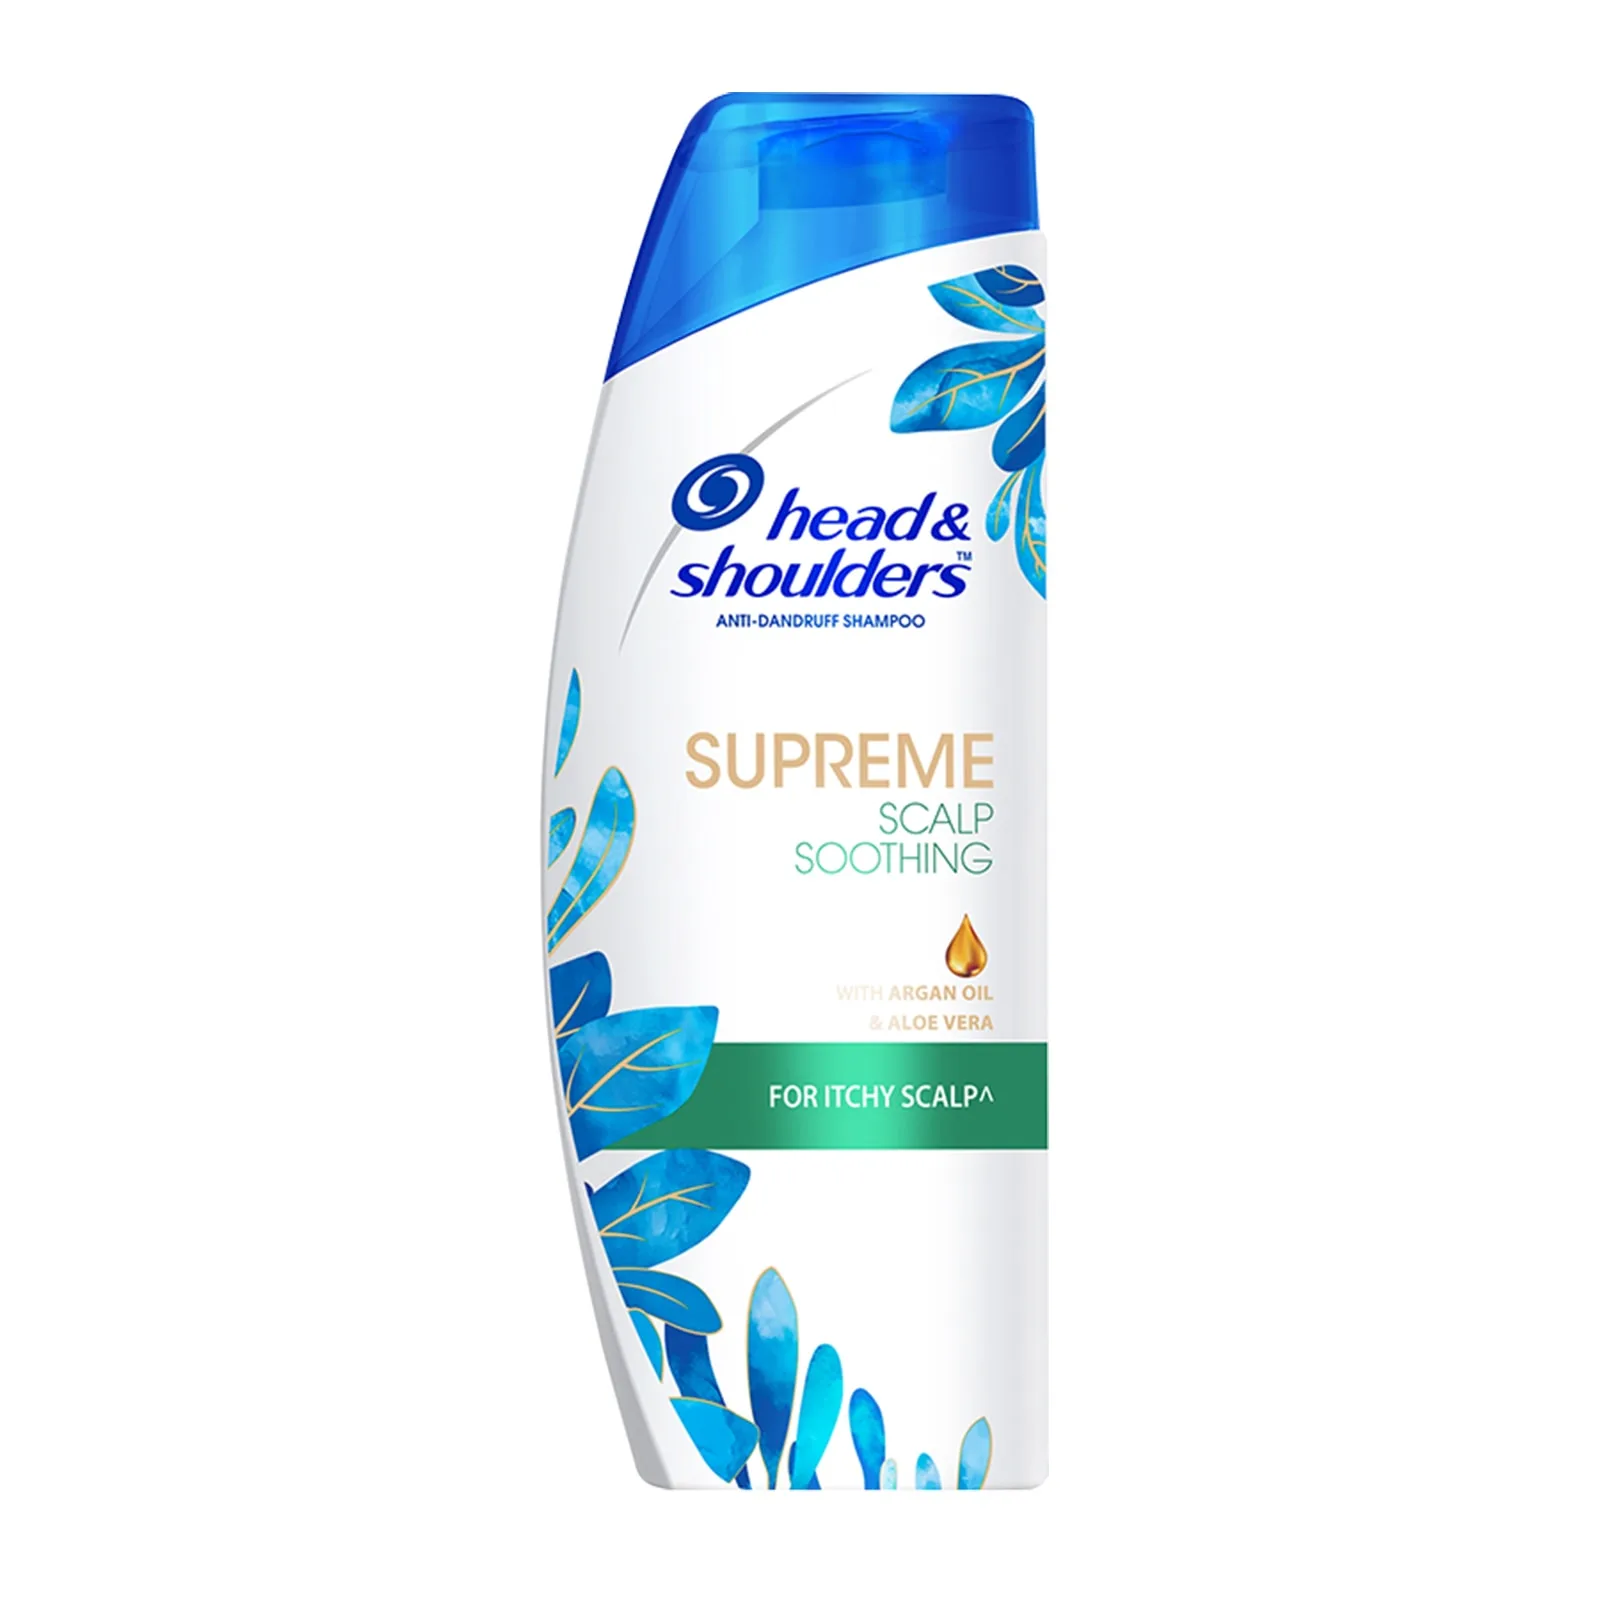 8. Supreme scalp soothing shampoo: